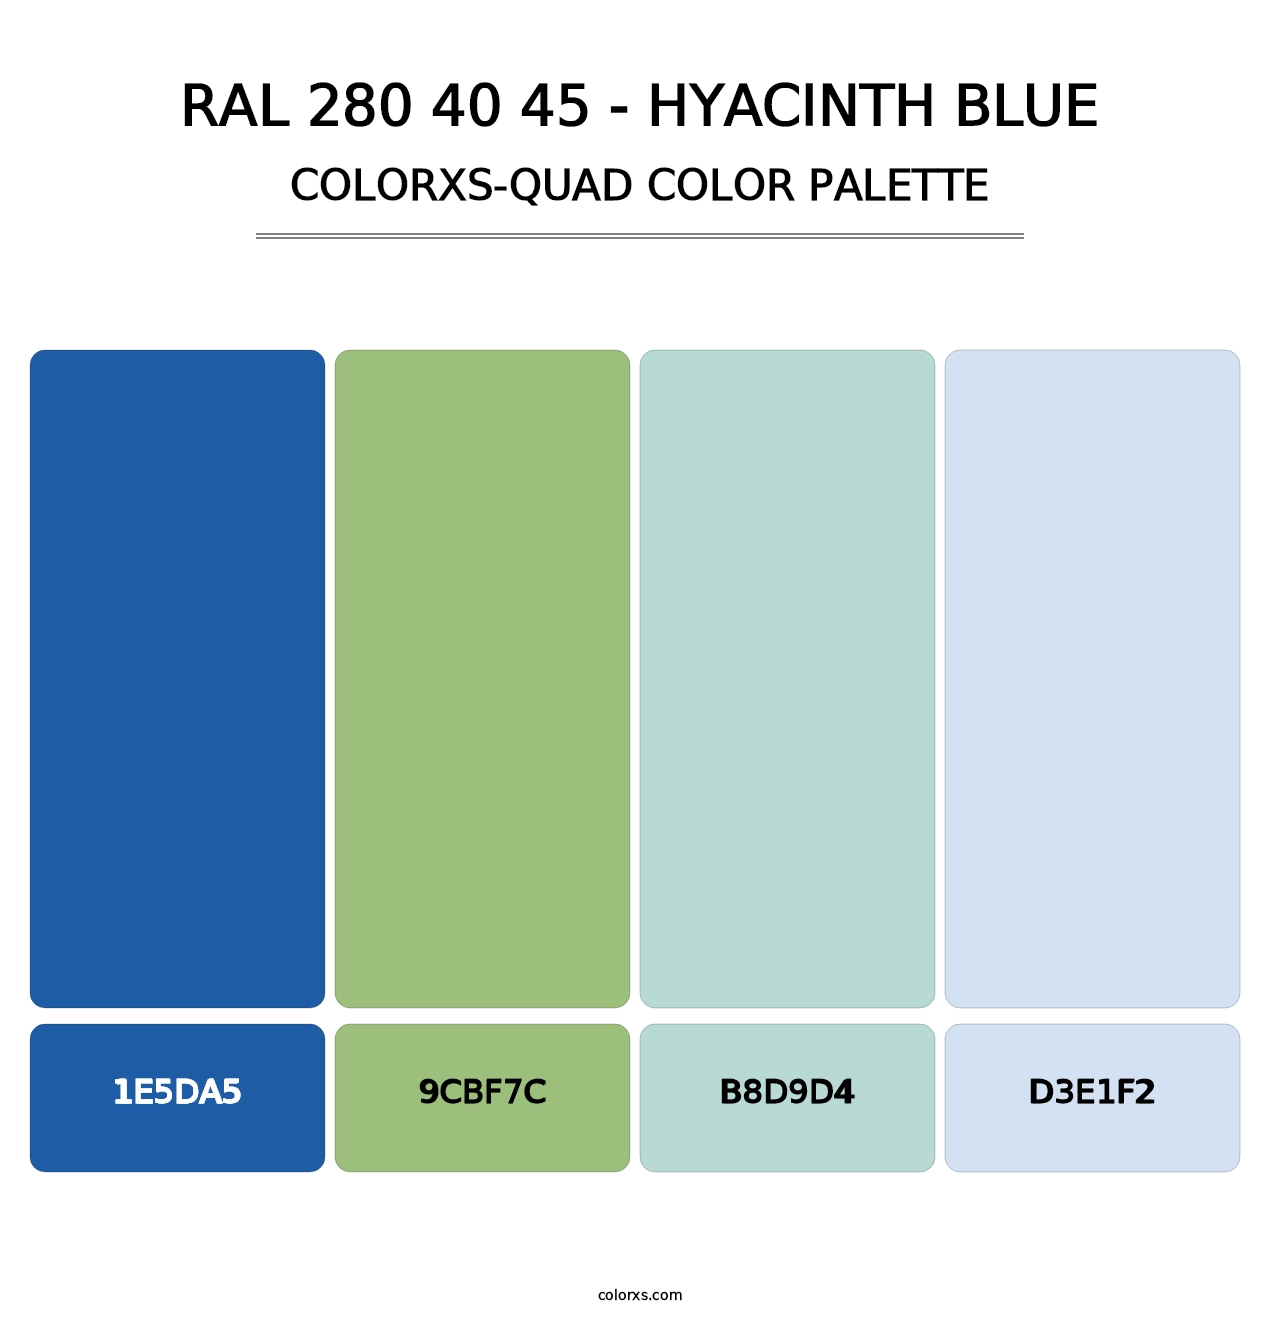 RAL 280 40 45 - Hyacinth Blue - Colorxs Quad Palette